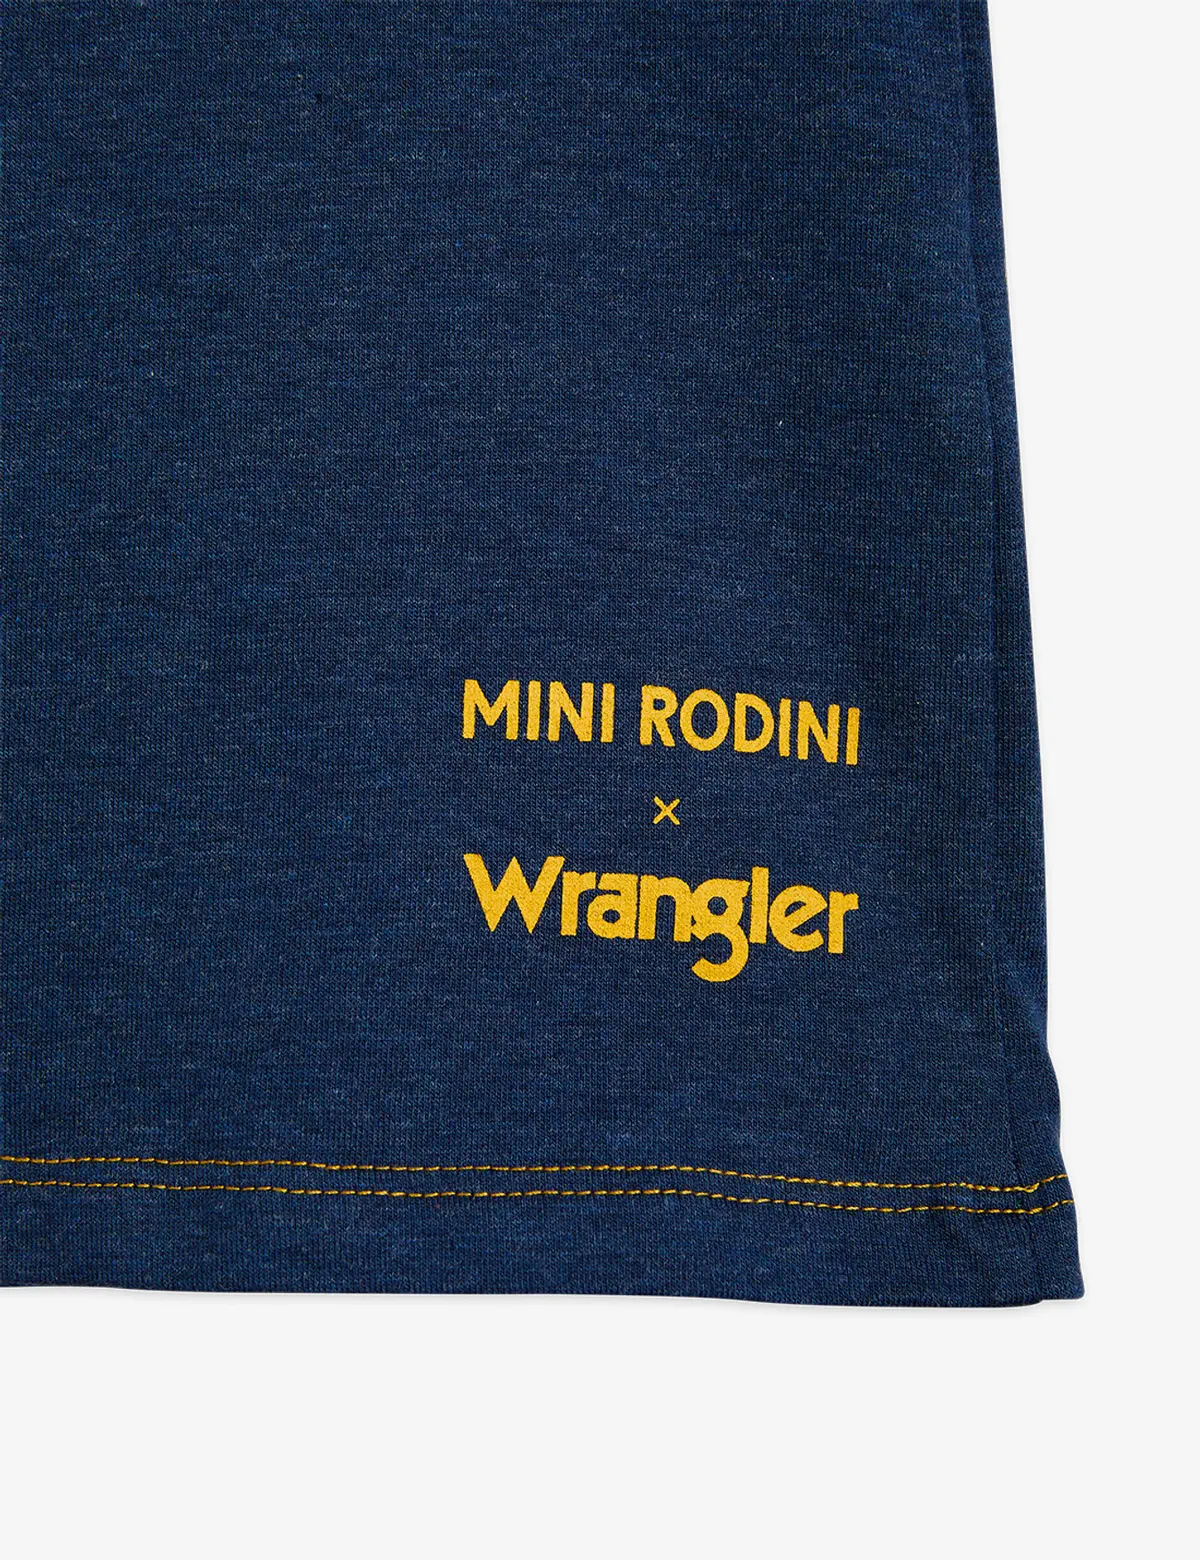 M.Rodini x Wrangler Linne-image-2